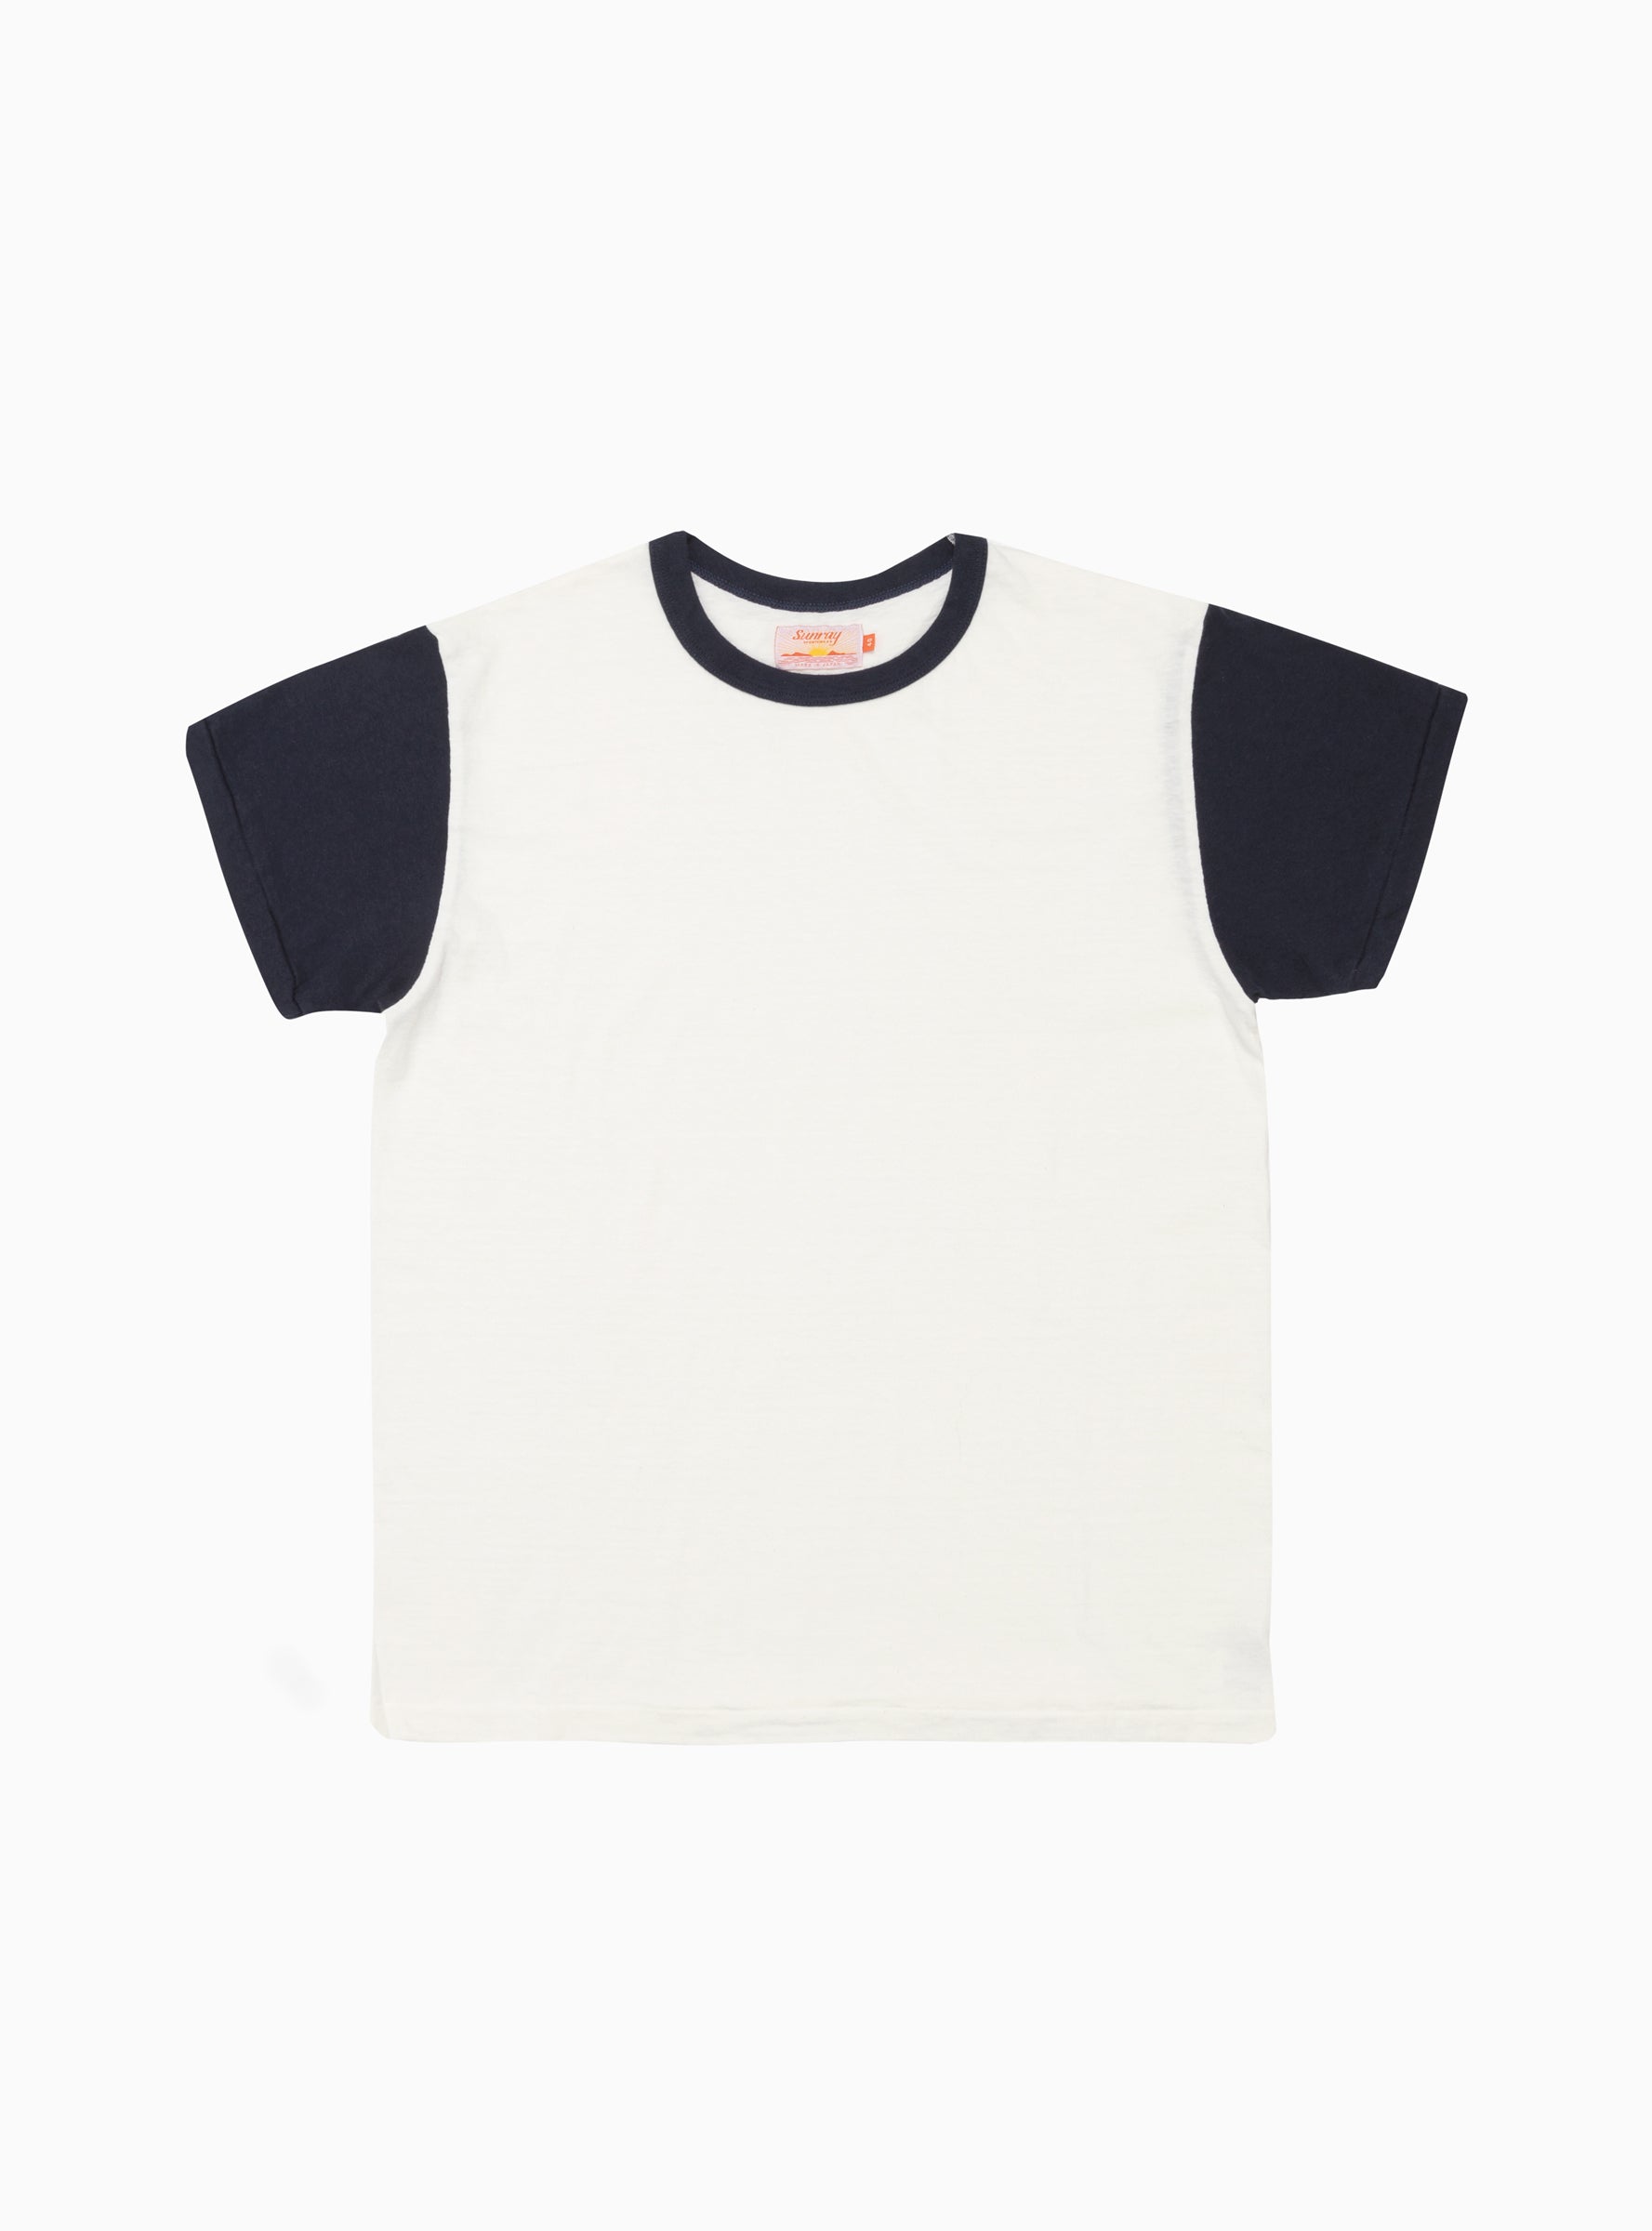 Sunray Sportswear La'ie T-shirt Off White & Dark Navy